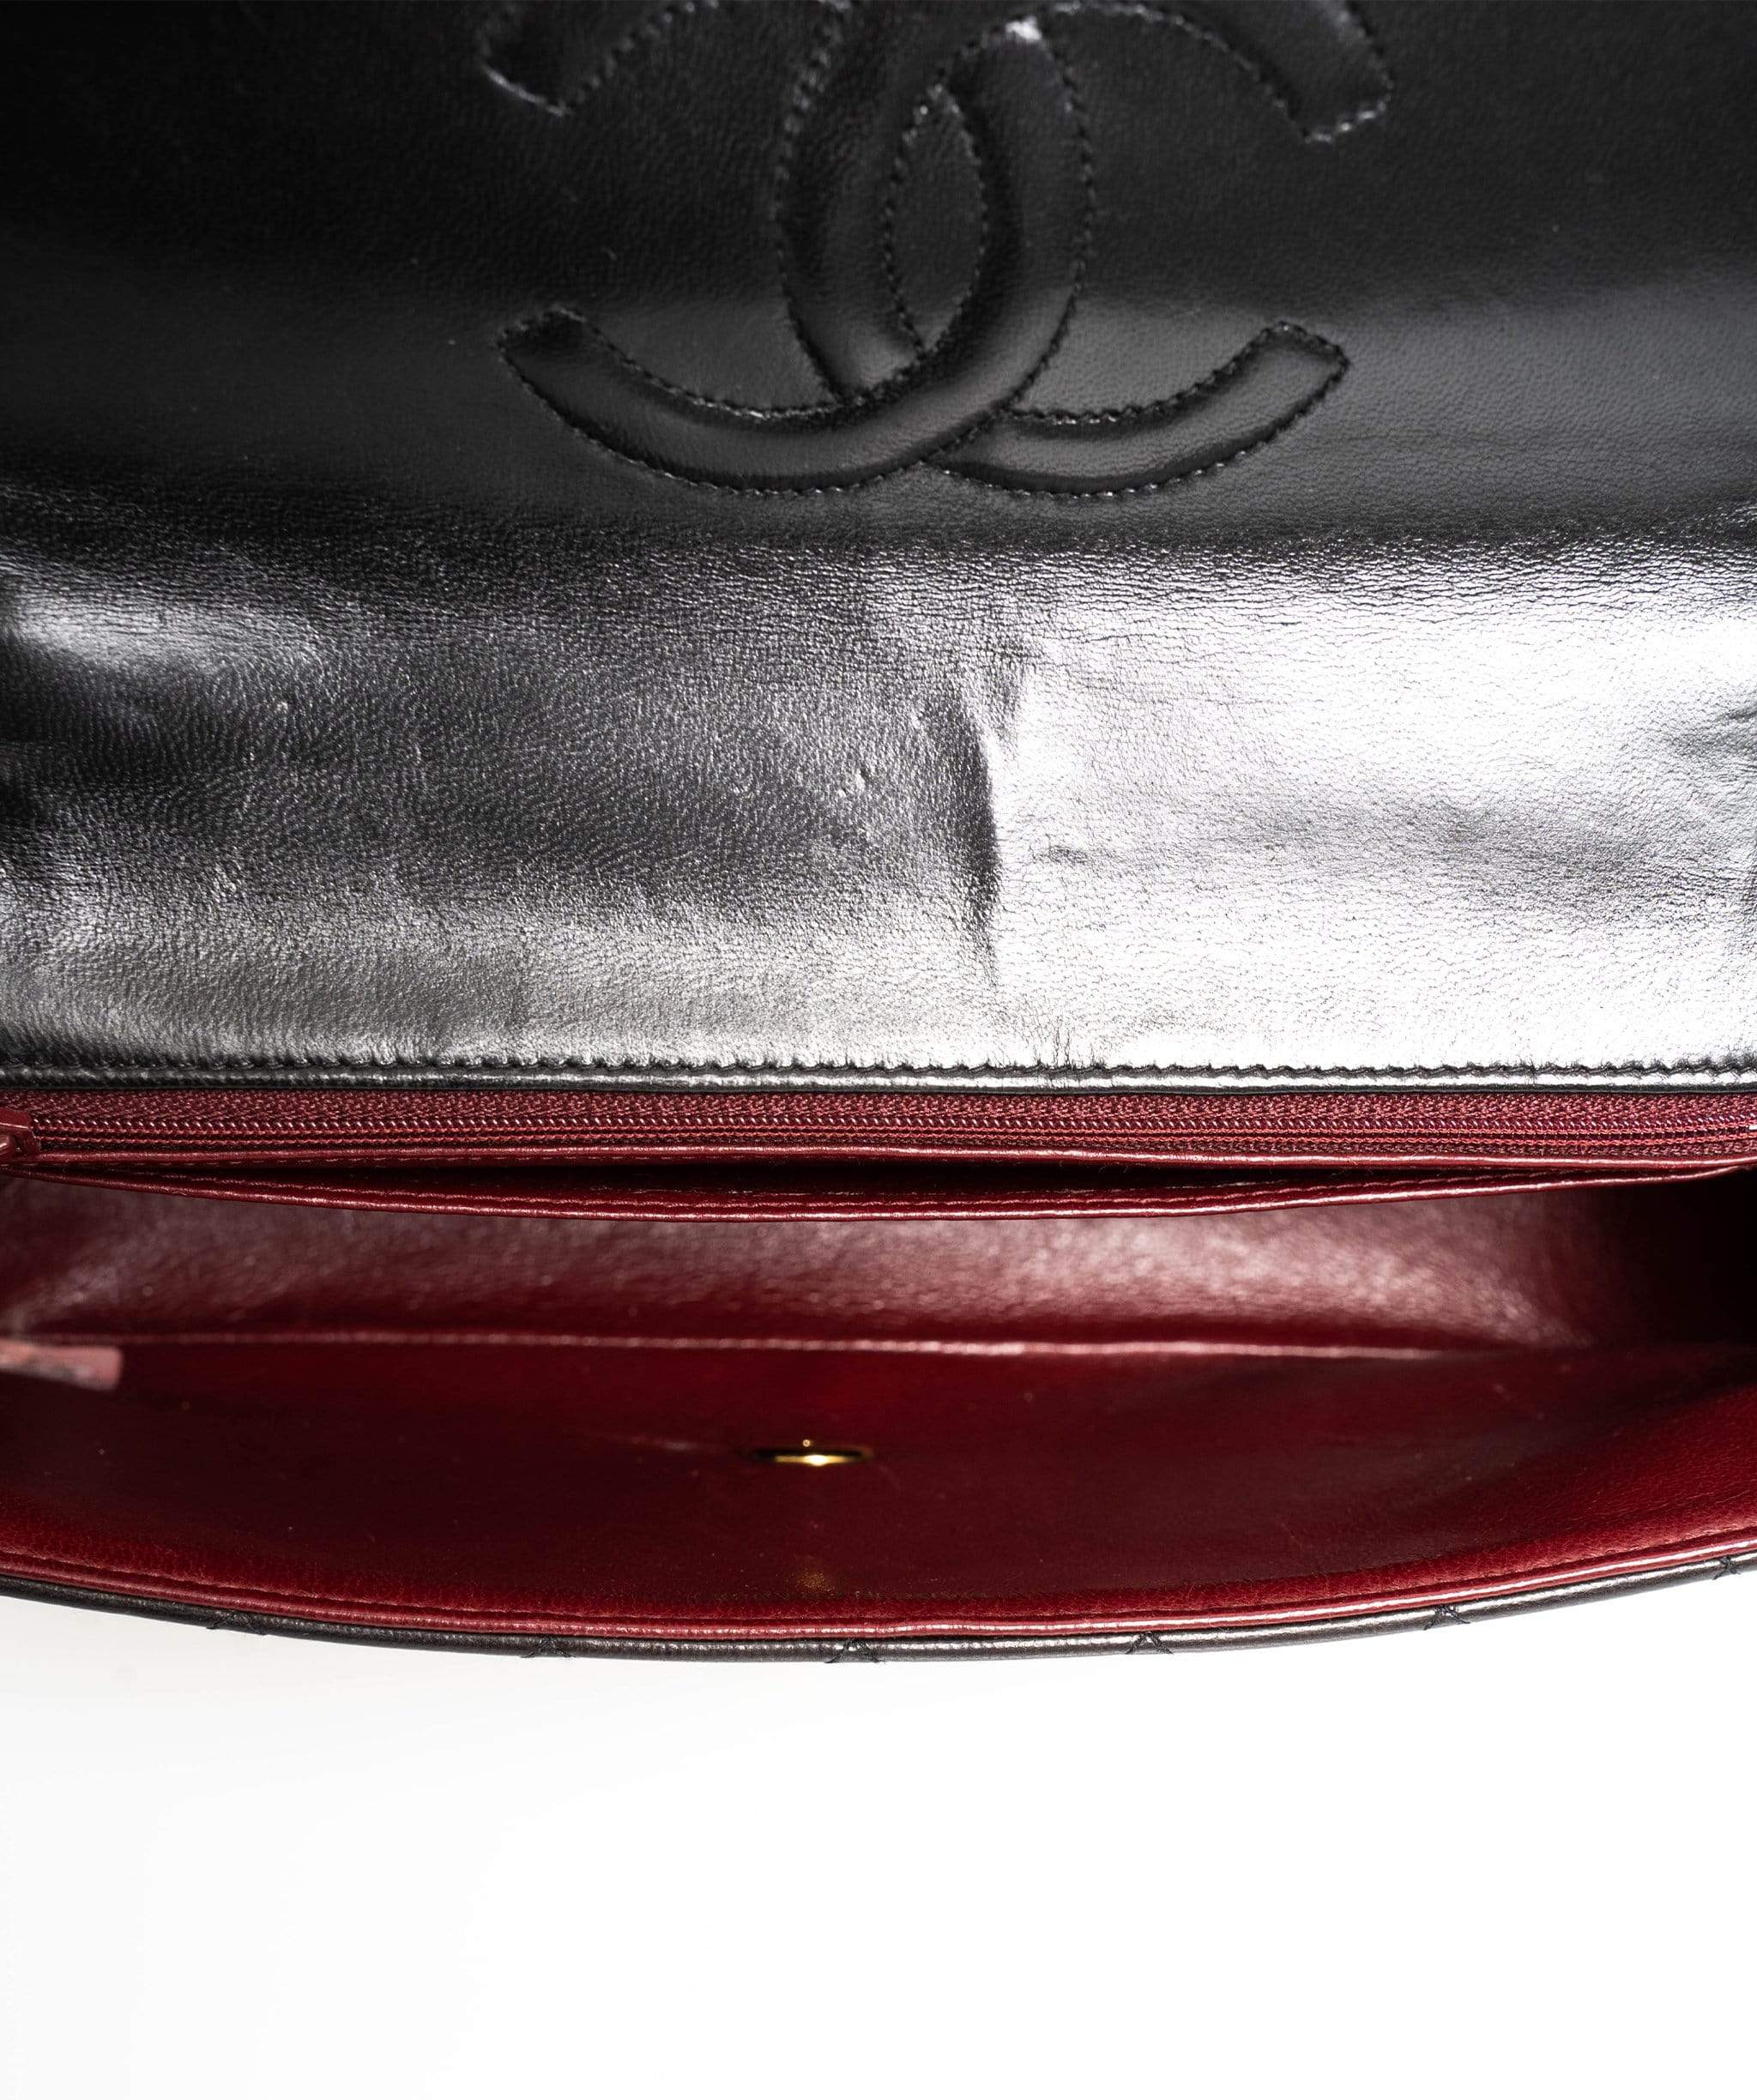 Chanel Chanel Vintage Classic Flap Top Handle Bag MW1679